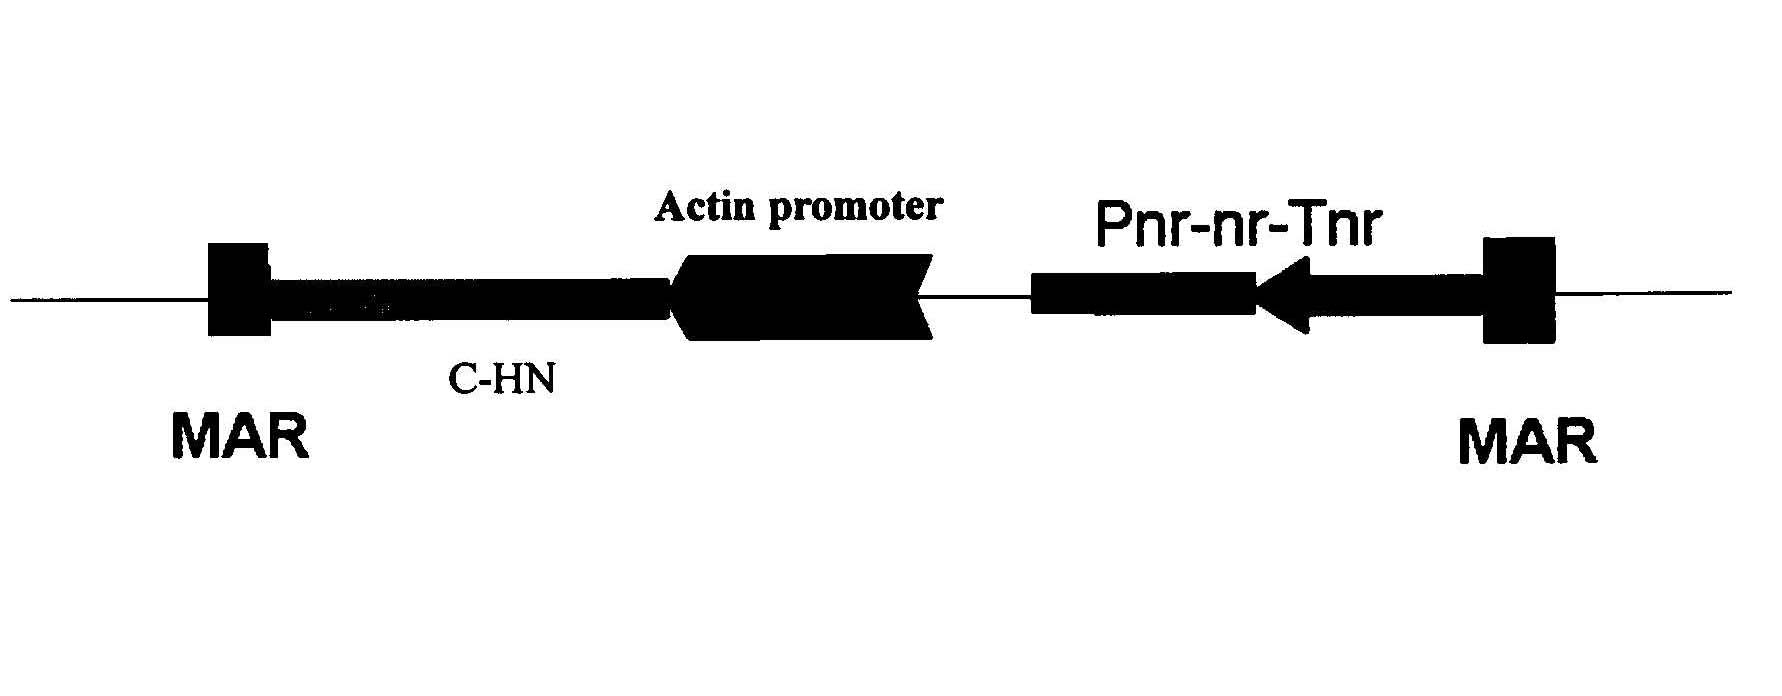 Method for preparing oral avian influenza vaccine from transgenic dunaliella